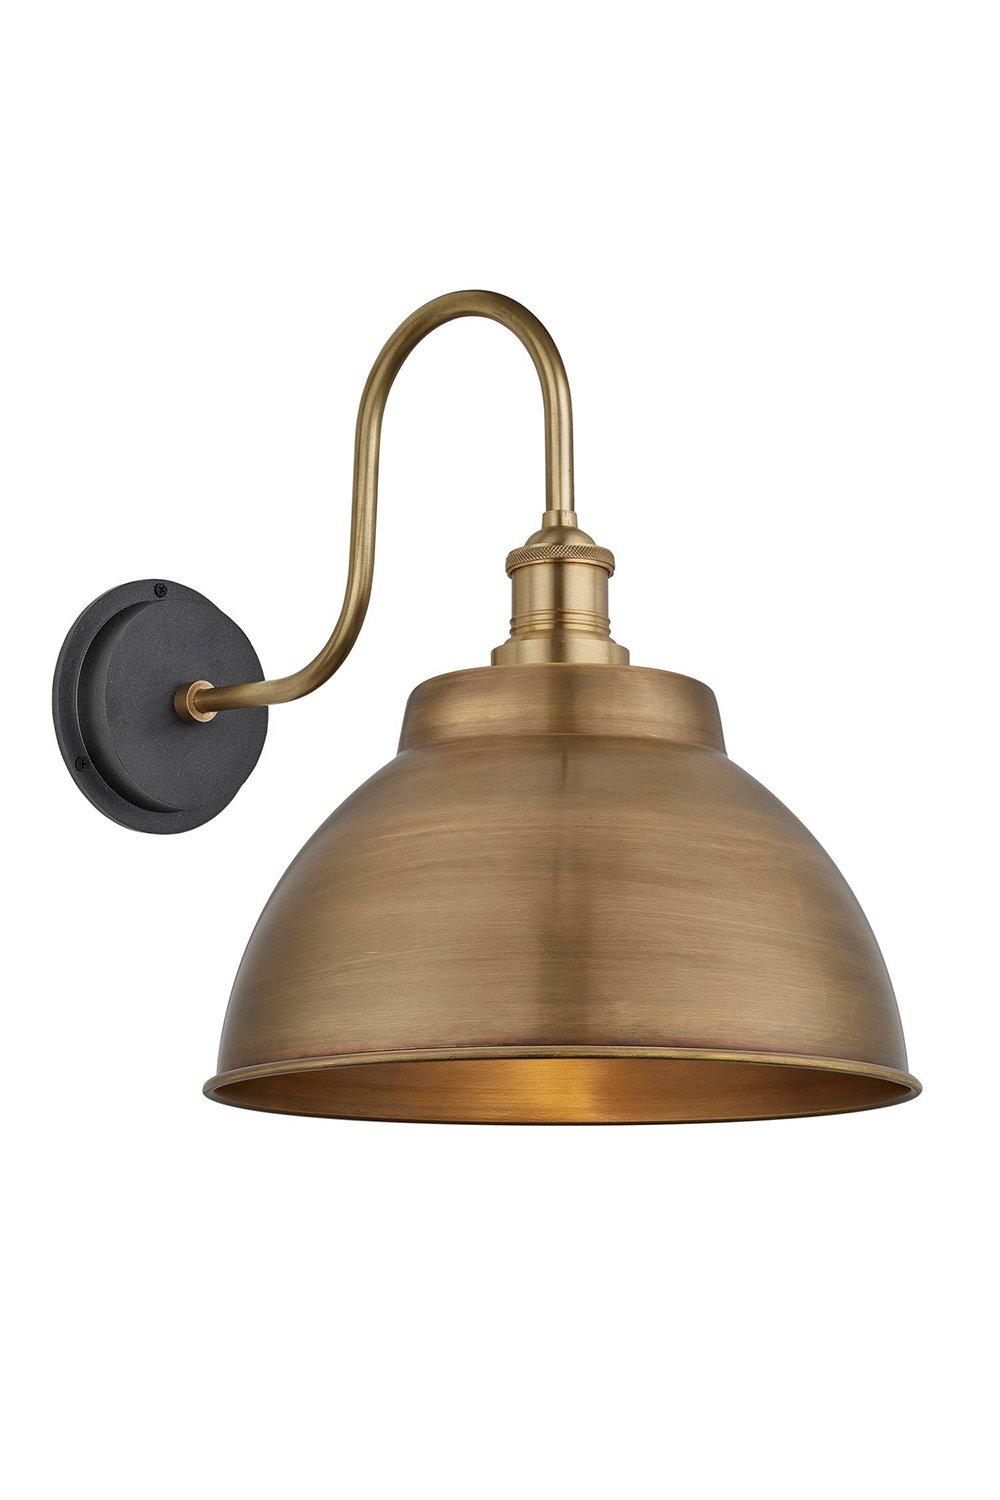 Swan Neck Outdoor & Bathroom Dome Wall Light, 13 Inch, Brass, Brass Holder, Globe Glass